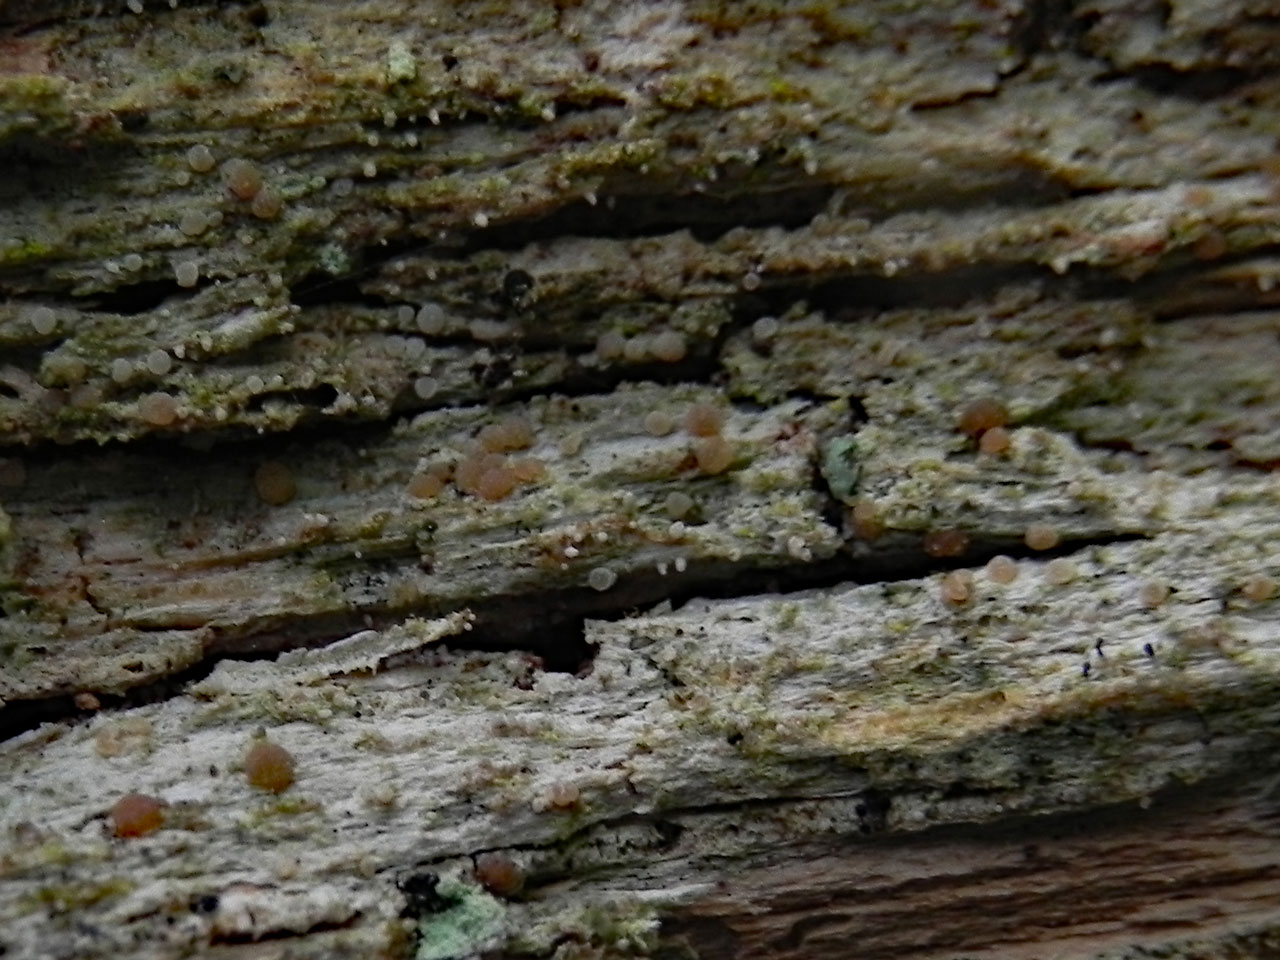 Biatora veteranorum, apothecia and pycnidia, dead wood, Cawdor Wood, Nairn